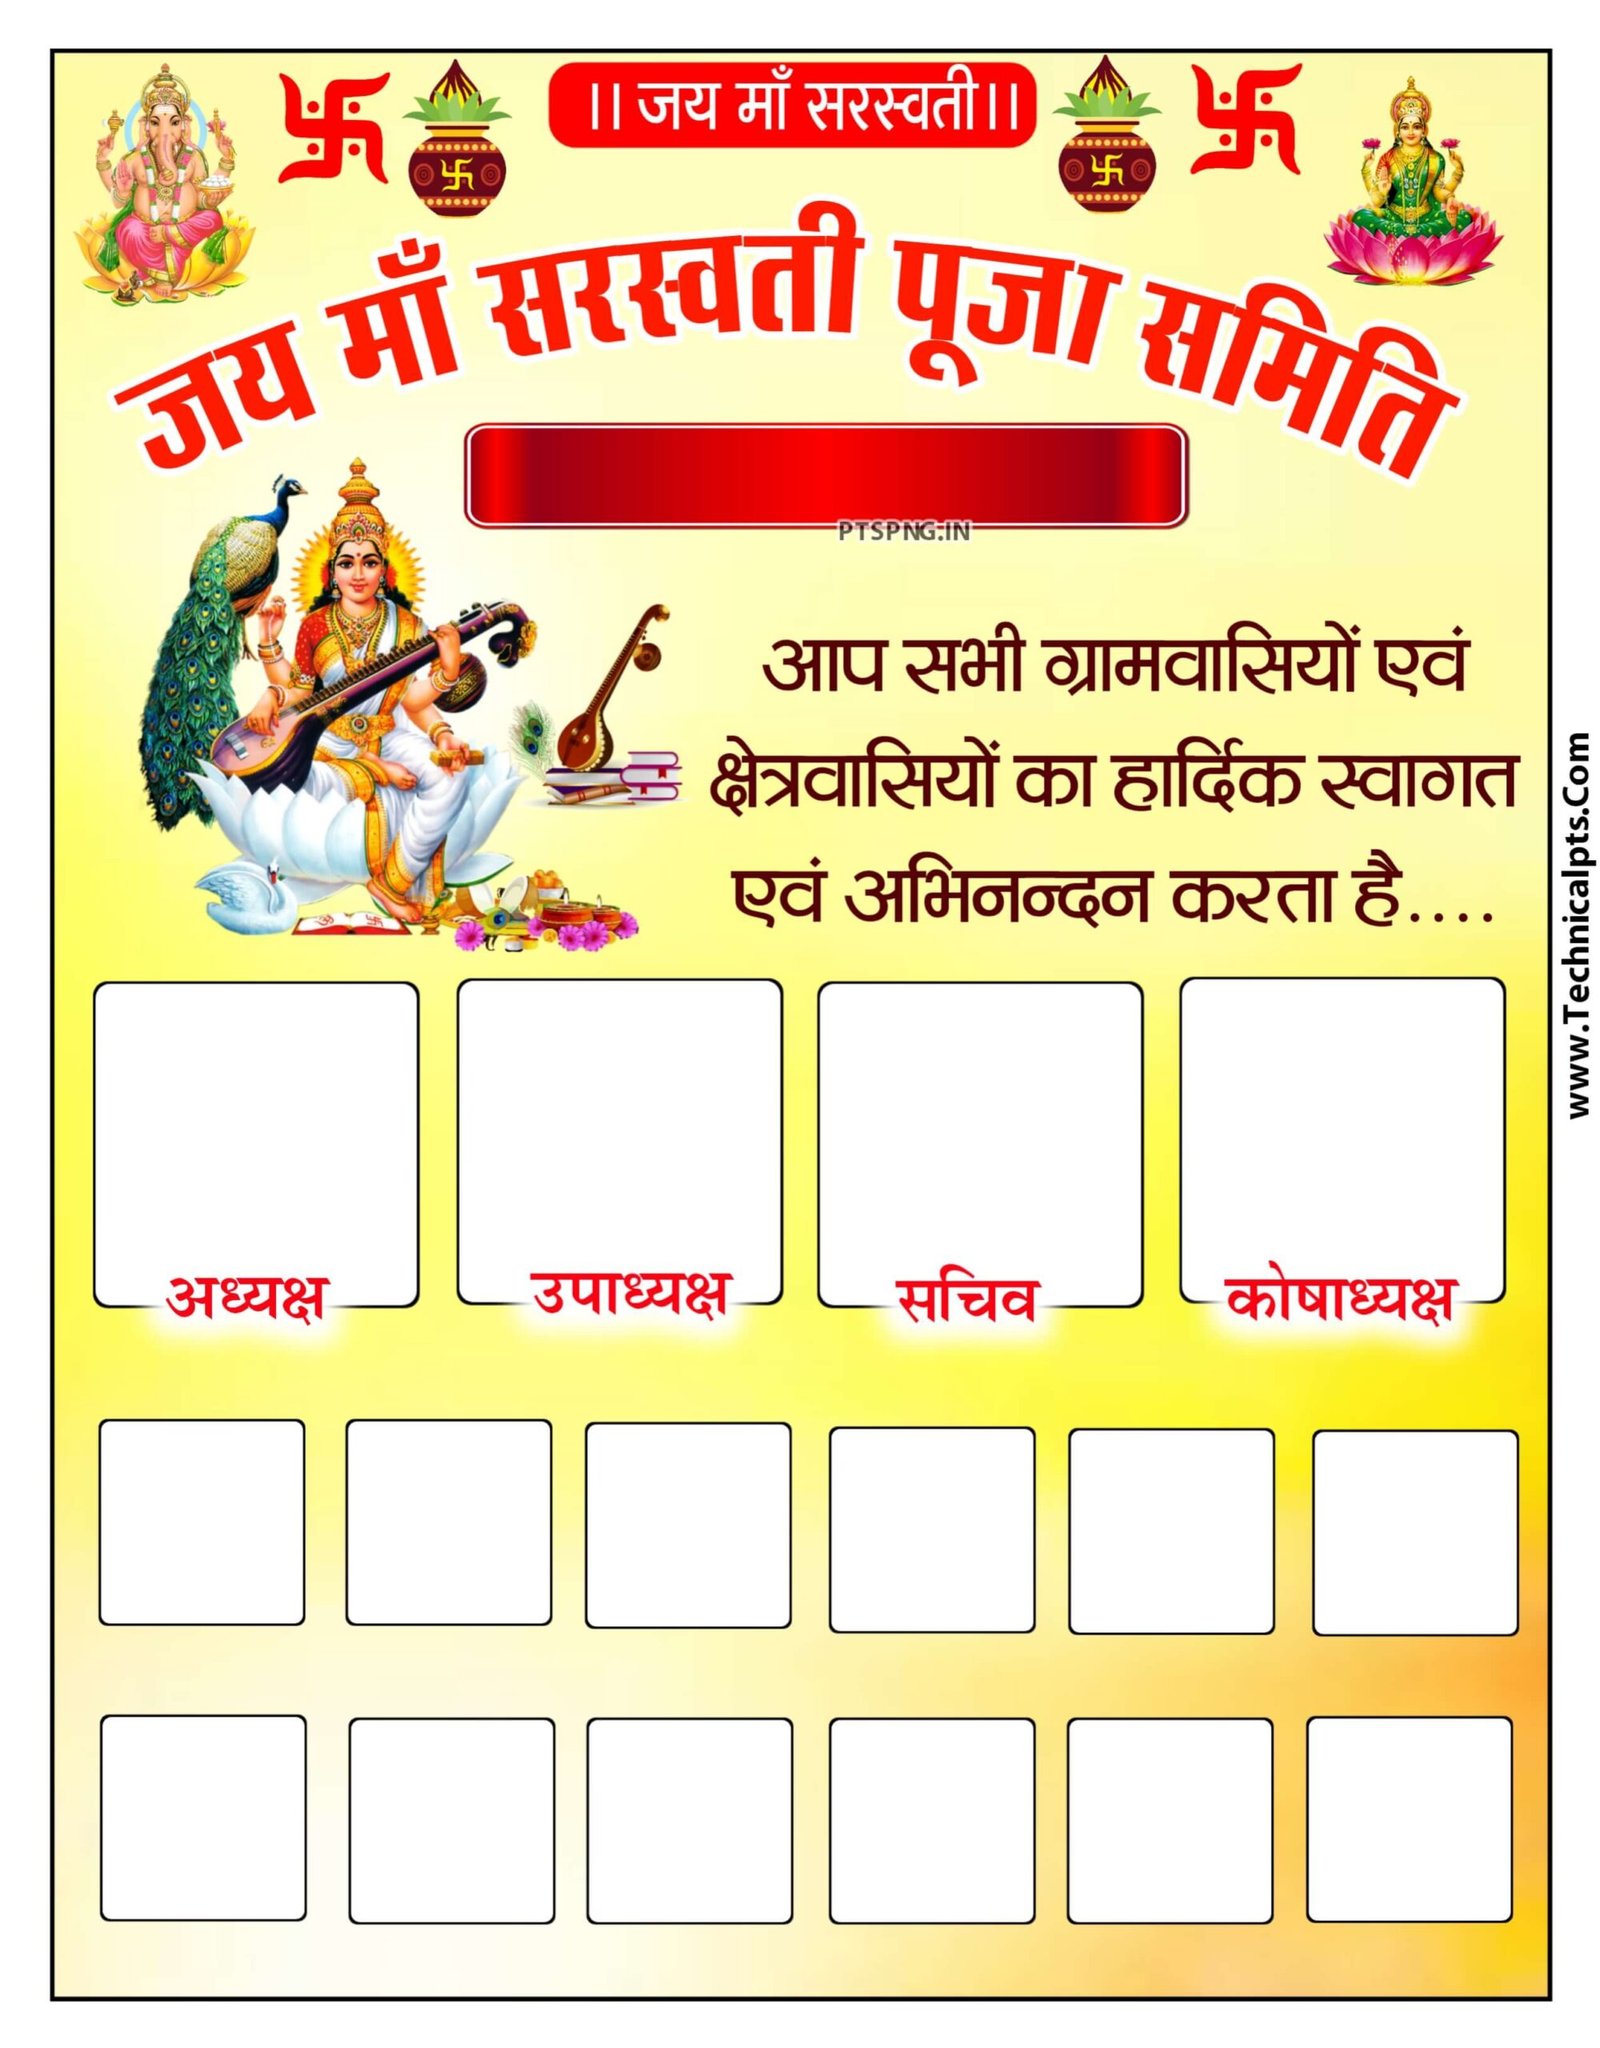 Mobile se Saraswati Puja samiti ka poster banaye| Saraswati Puja group poster banaye| Saraswati Puja editing png background images